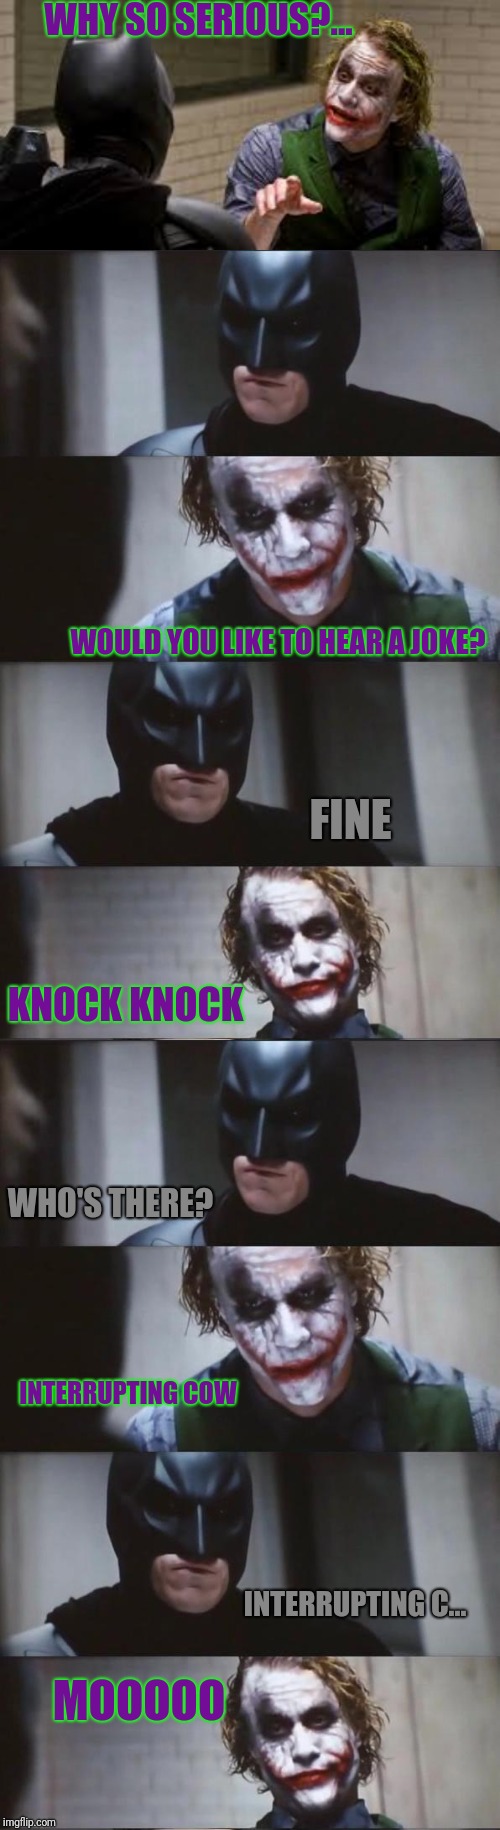 Joker tells Batman a joke |  WHY SO SERIOUS?... WOULD YOU LIKE TO HEAR A JOKE? FINE; KNOCK KNOCK; WHO'S THERE? INTERRUPTING COW; INTERRUPTING C... MOOOOO | image tagged in batman and joker,joke,interrupting cow,moo | made w/ Imgflip meme maker